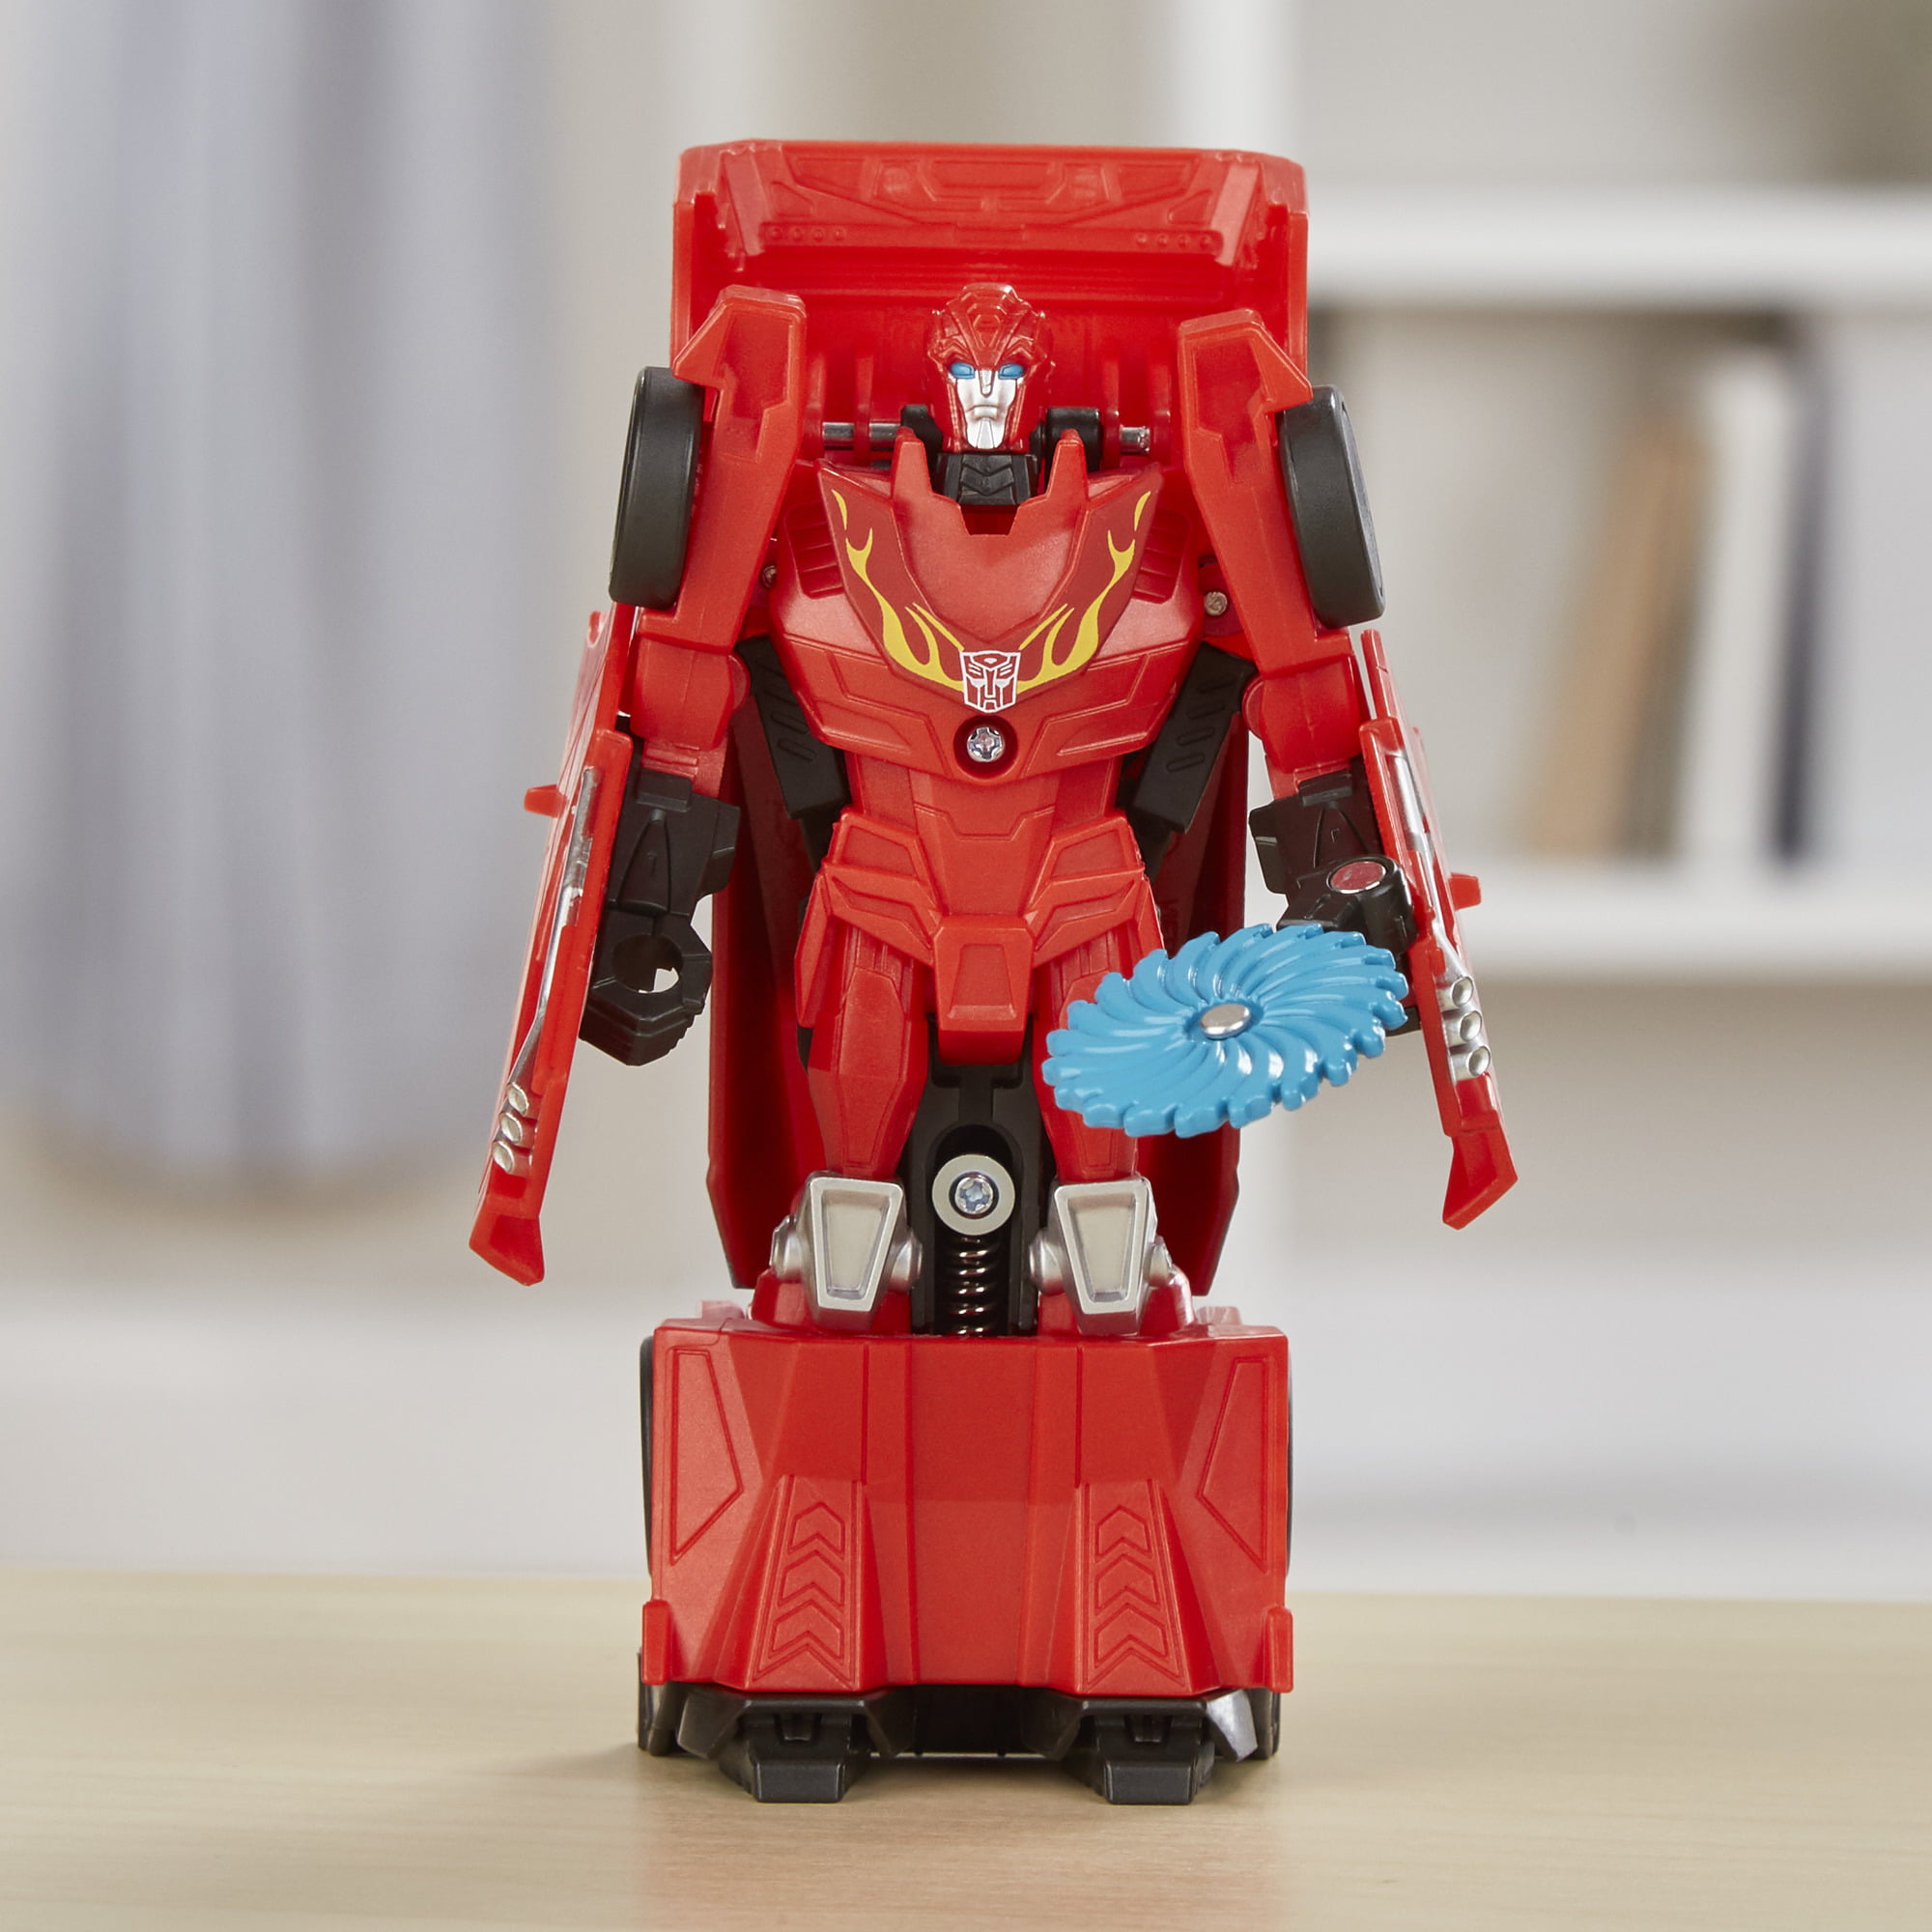 Hasbro C2033 Transformers Autobot Hot Rod verwandelbare Mini-Actionfigur 7,5 cm. 